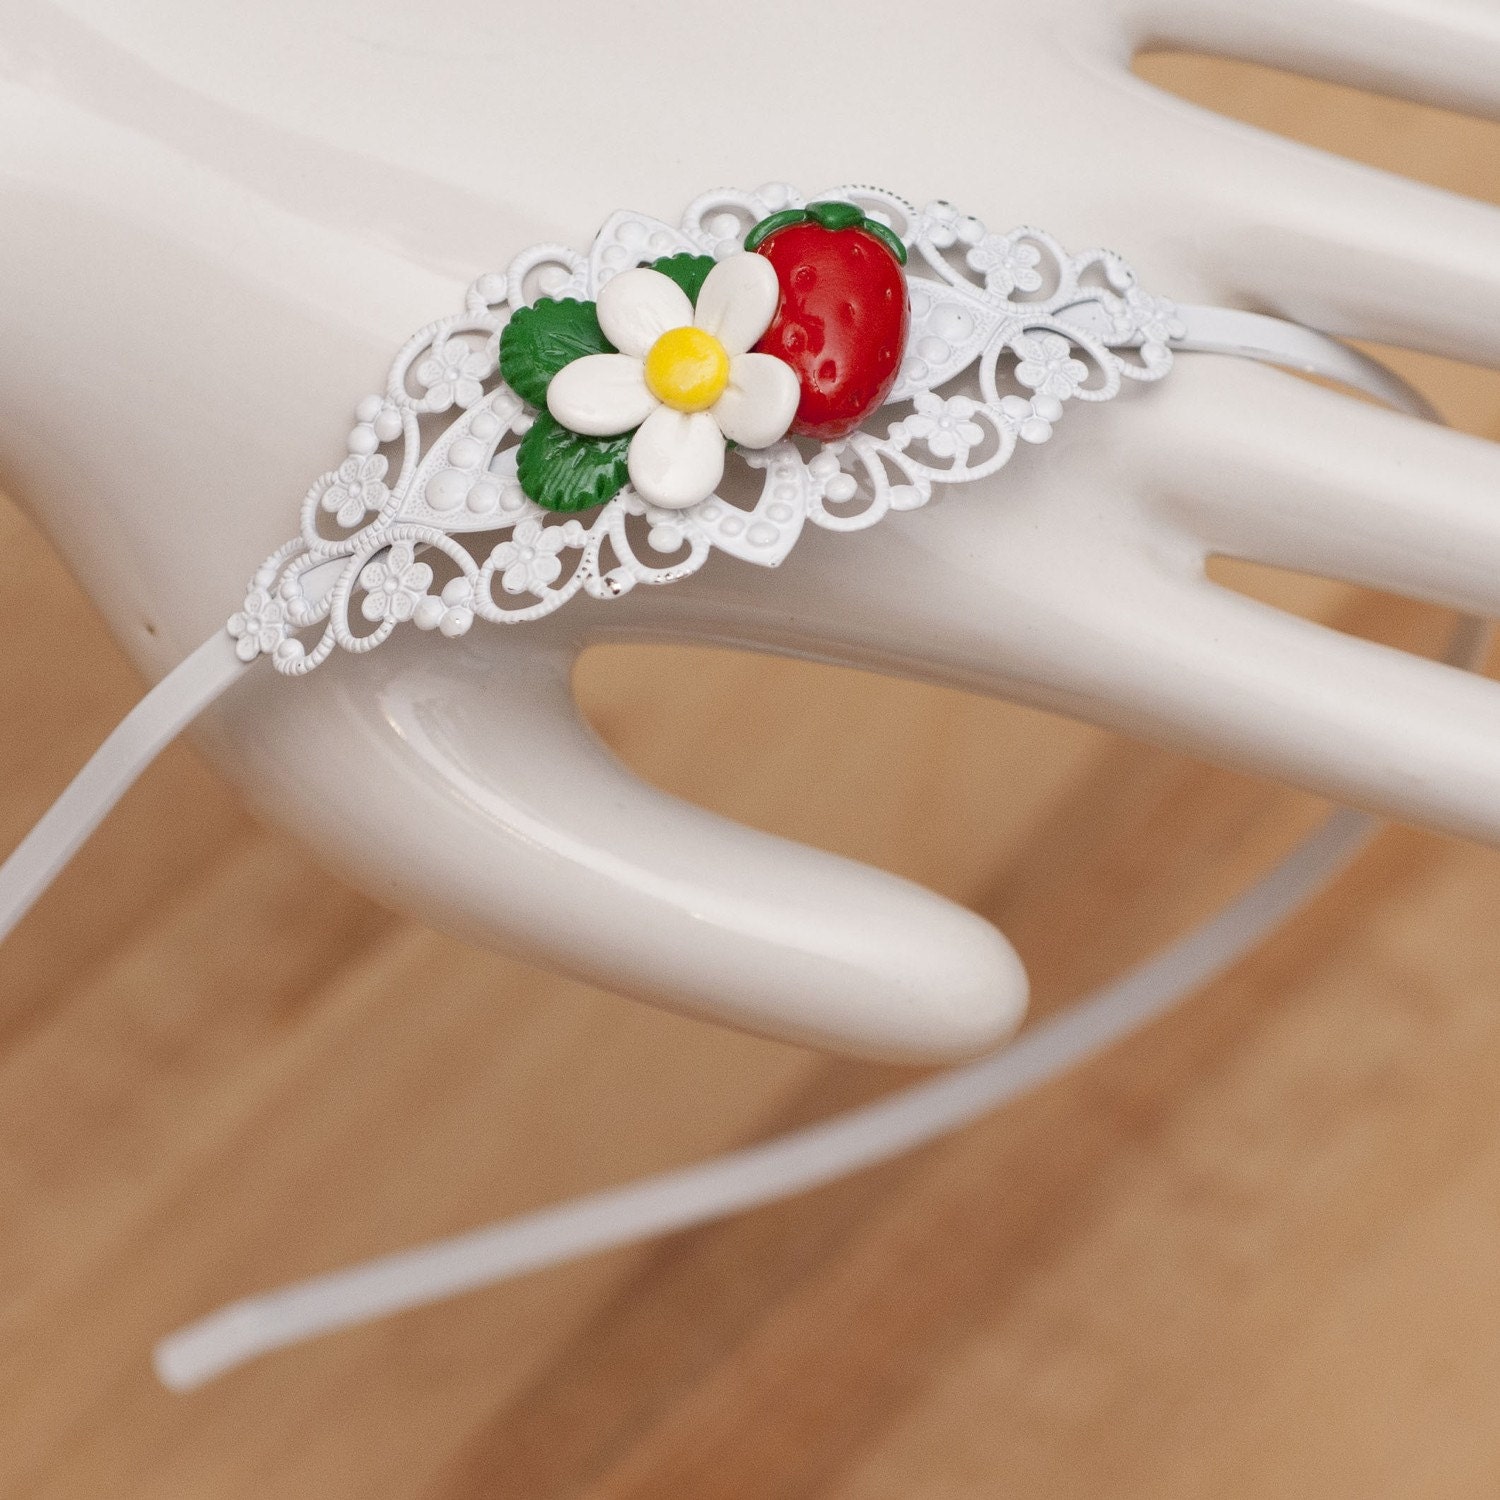 Roscata Filligree Strawberry Patch Headband - Handmade Polymer Clay Miniature Food Jewelry